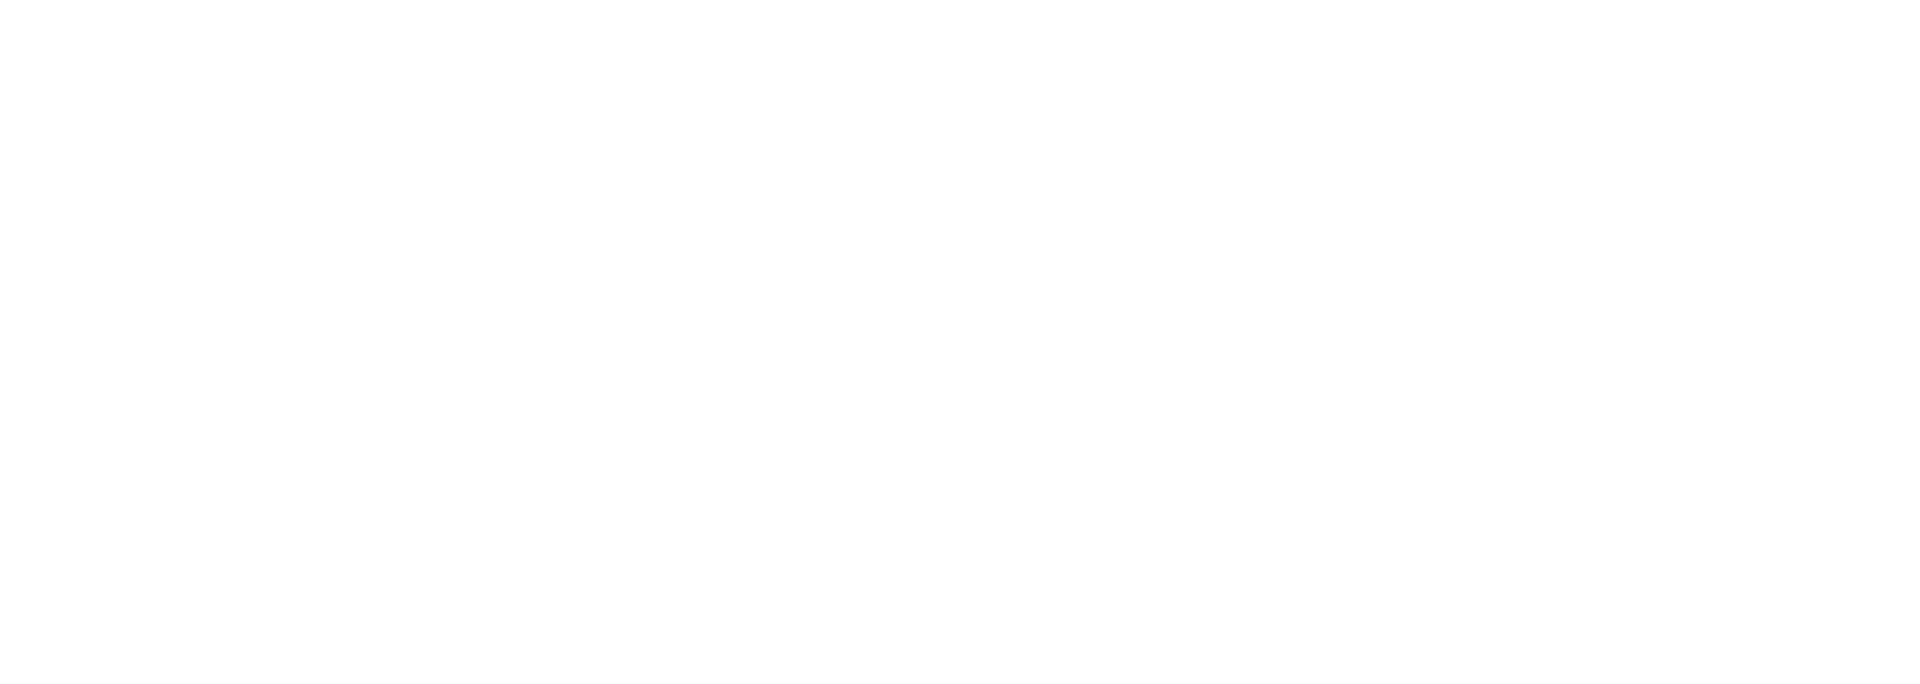 mib text logo